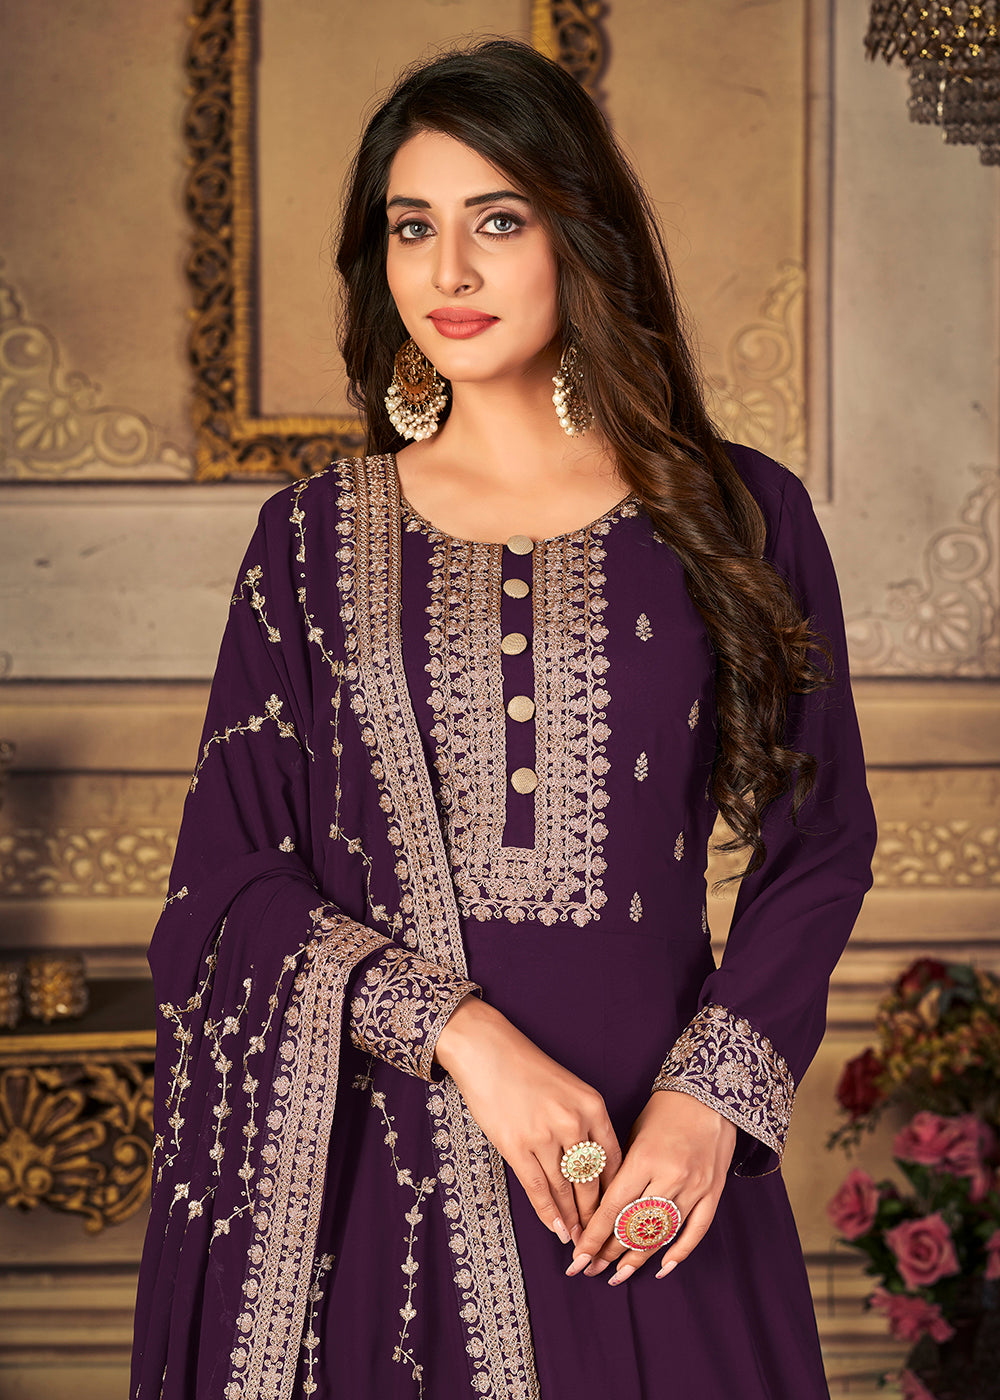 Buy Now Georgette Plum Purple Embellished Wedding Fest Anarkali Suit Online in Canada at Empress Clothing.